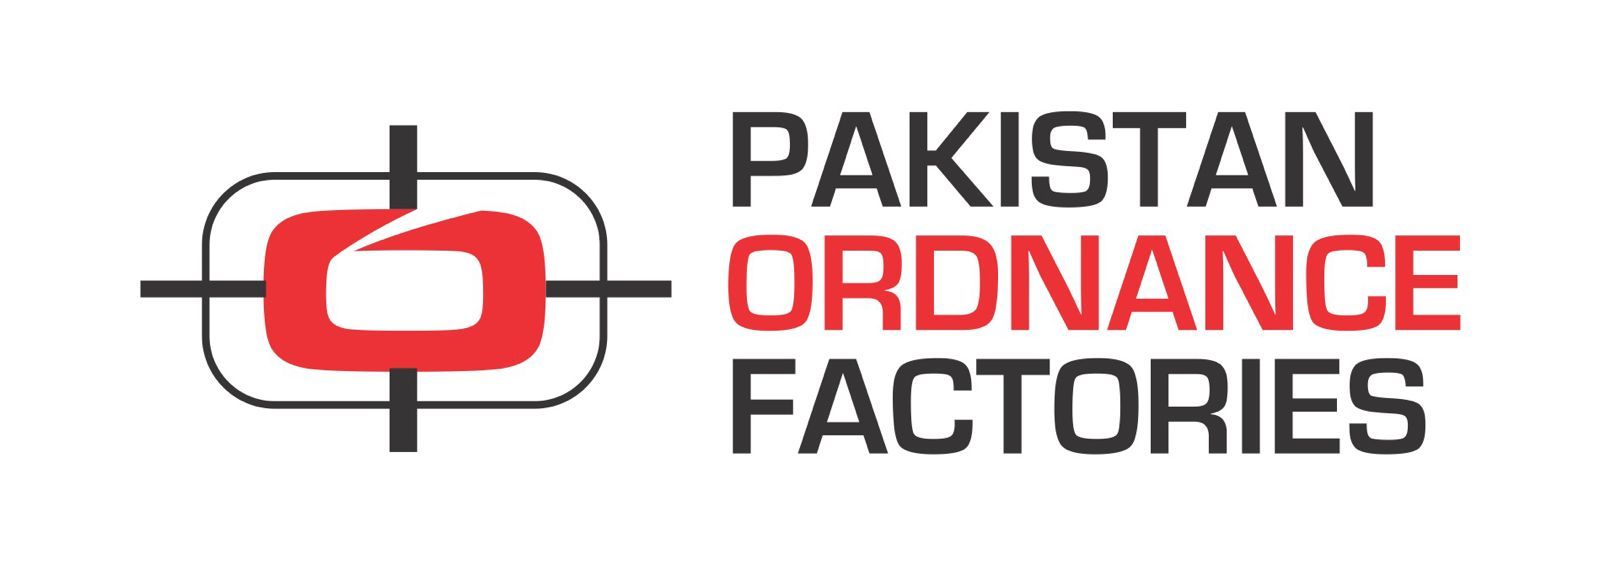 Pakistan Ordnance Factories (POF)